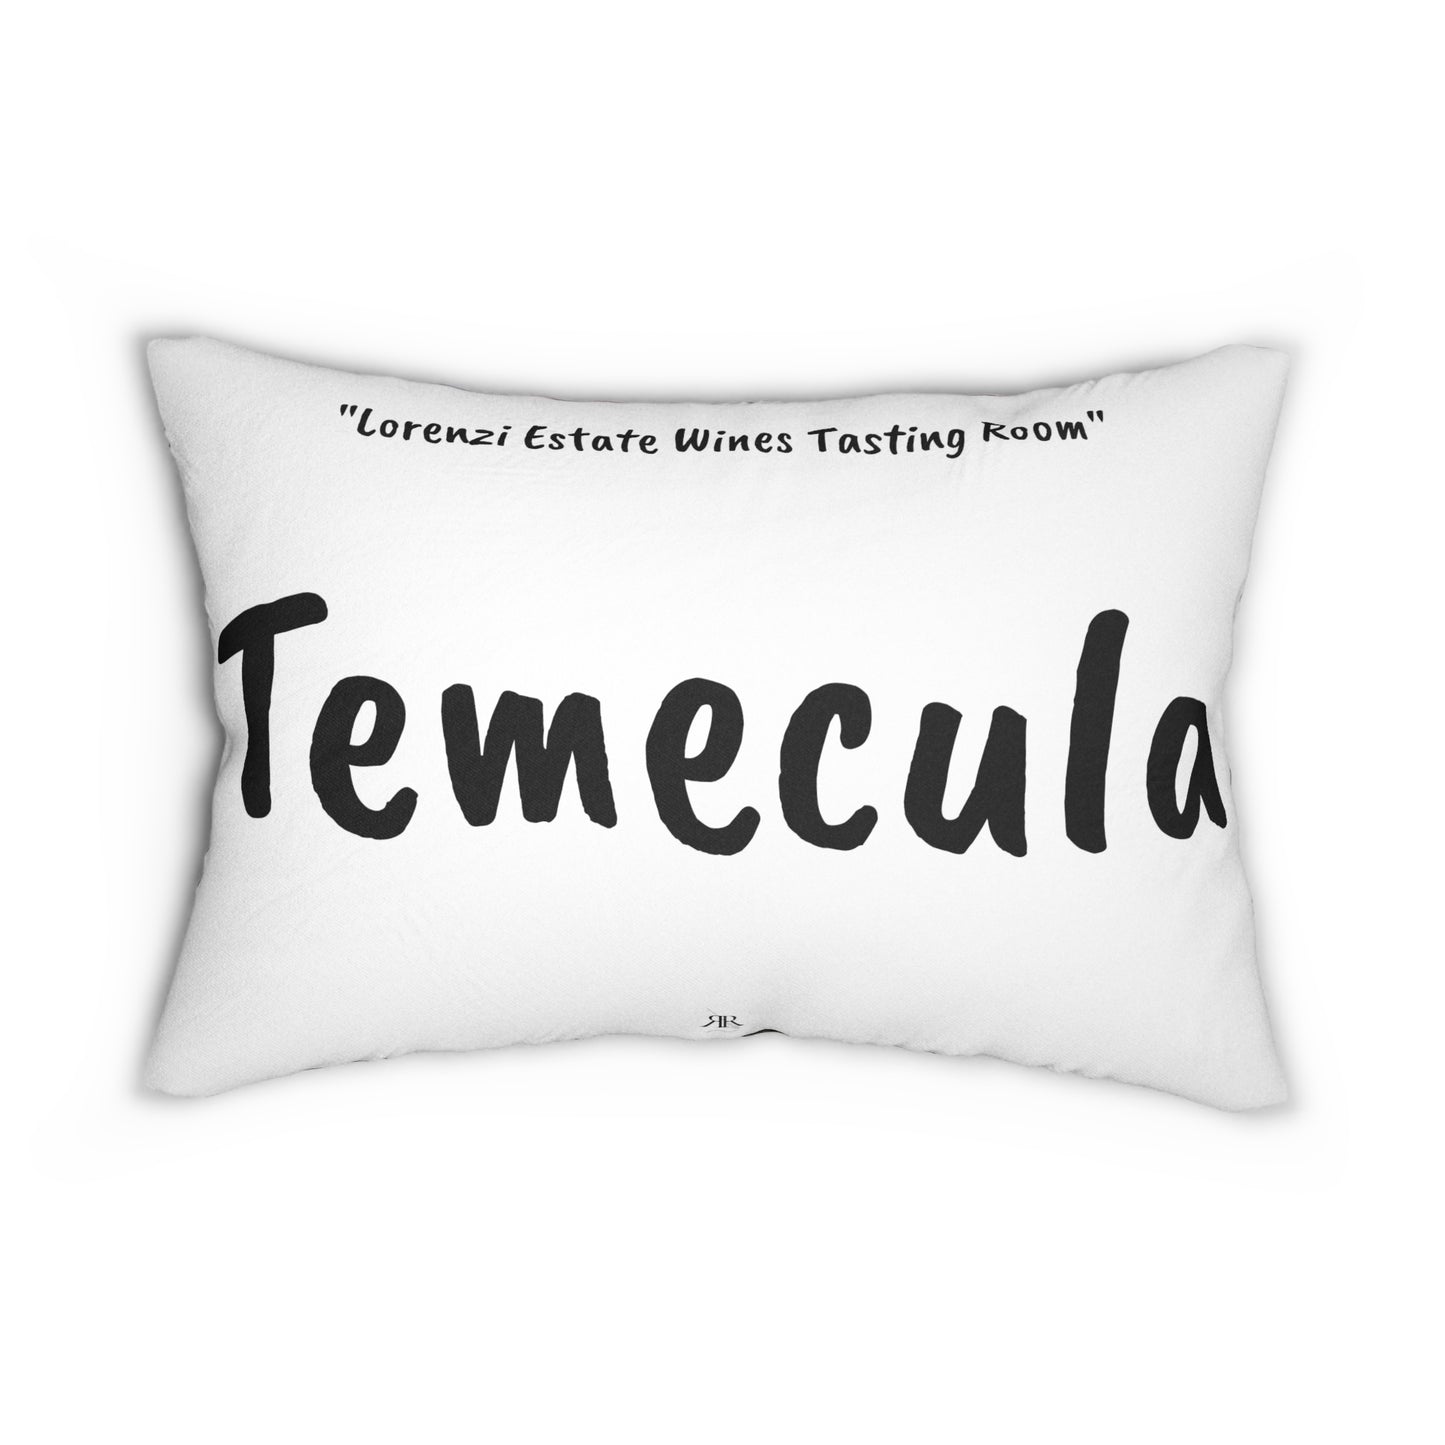 Oreiller lombaire Temecula avec peinture « Lorenzi Estate Wines Tasting Room » et « Temecula »